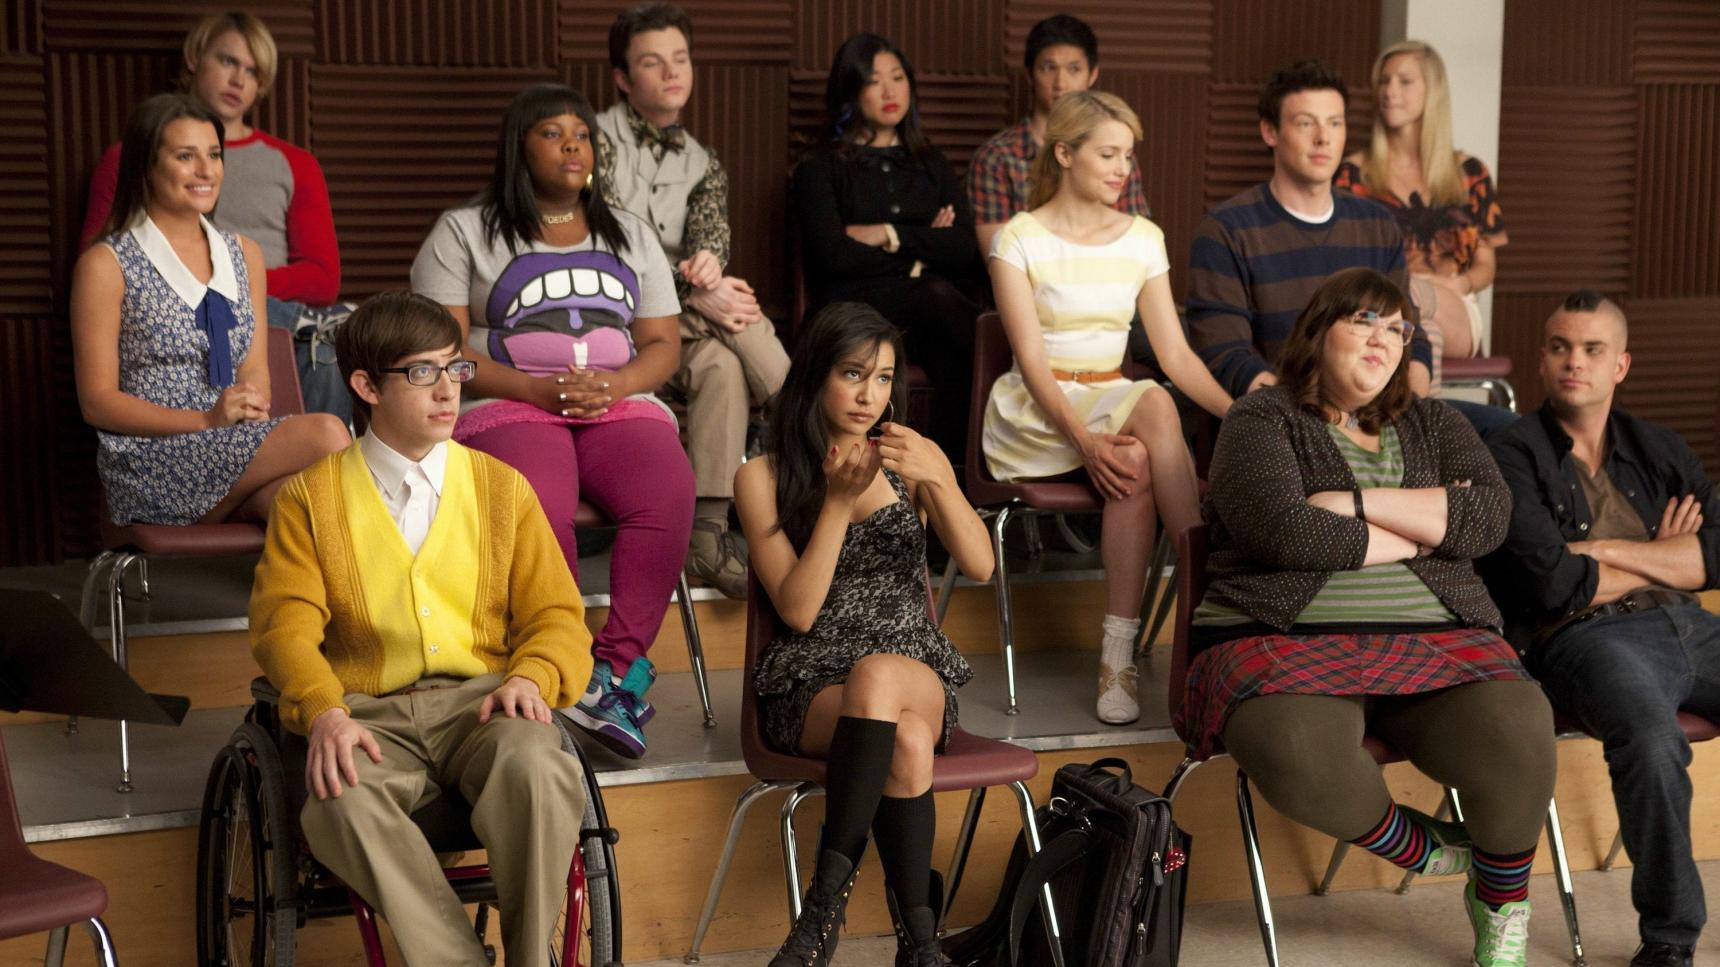 Poster del episodio 20 de Glee online